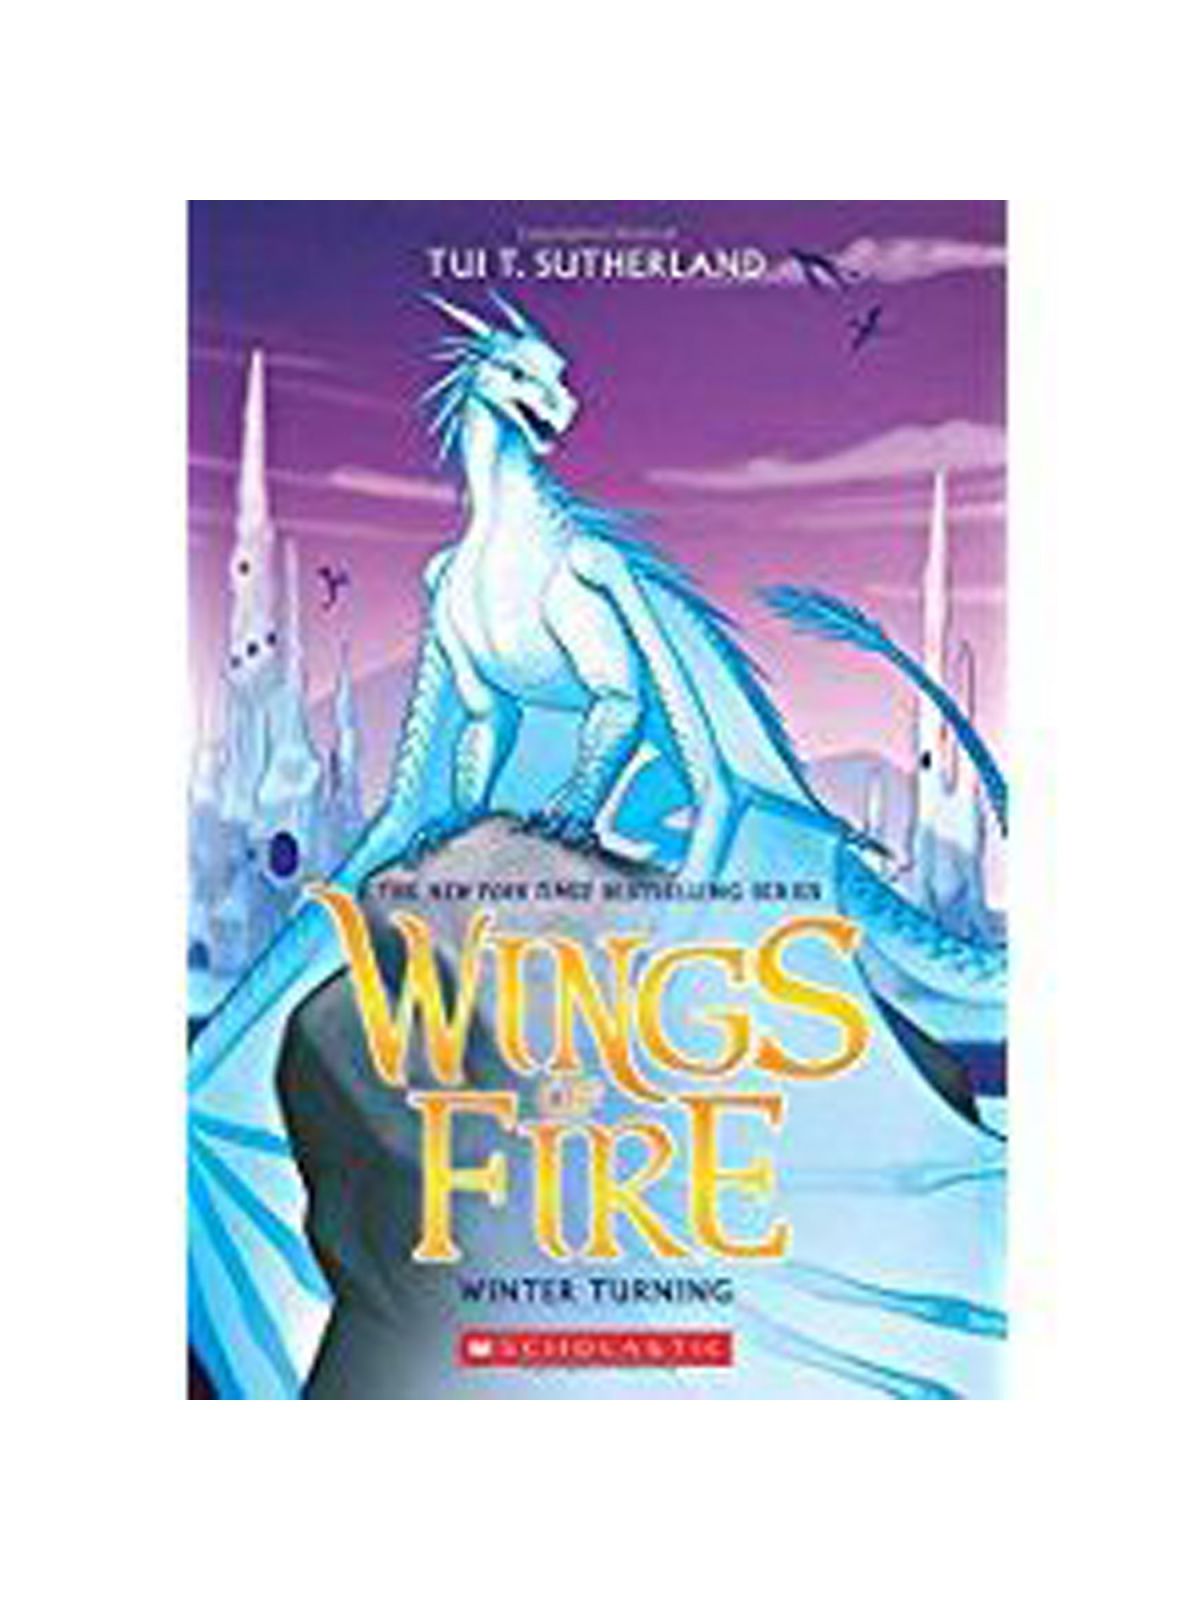 WINGS OF FIRE WINTER TURNING BK7 SUTHERLAND, TUI T Купить Книгу на Английском